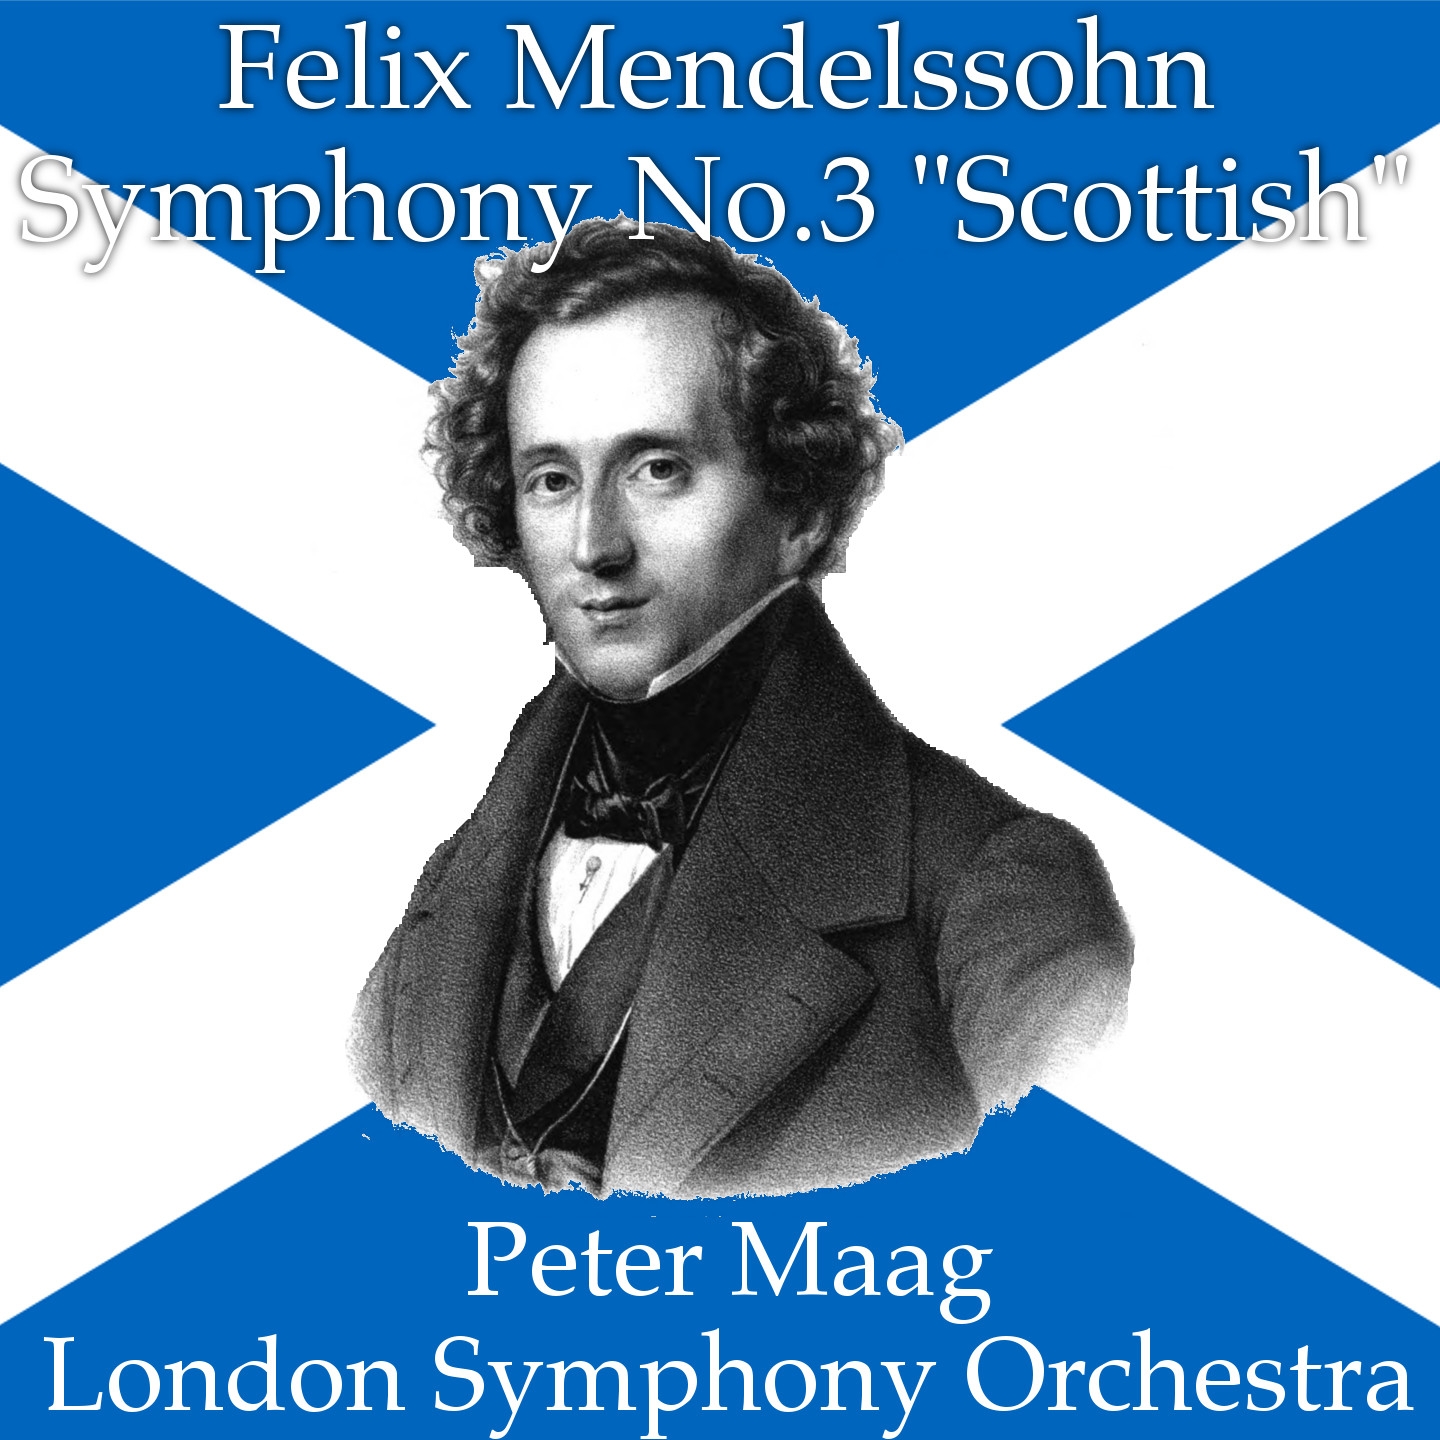 Mendelssohn: Symphony No. 3 in A minor, op.56 "Scottish"